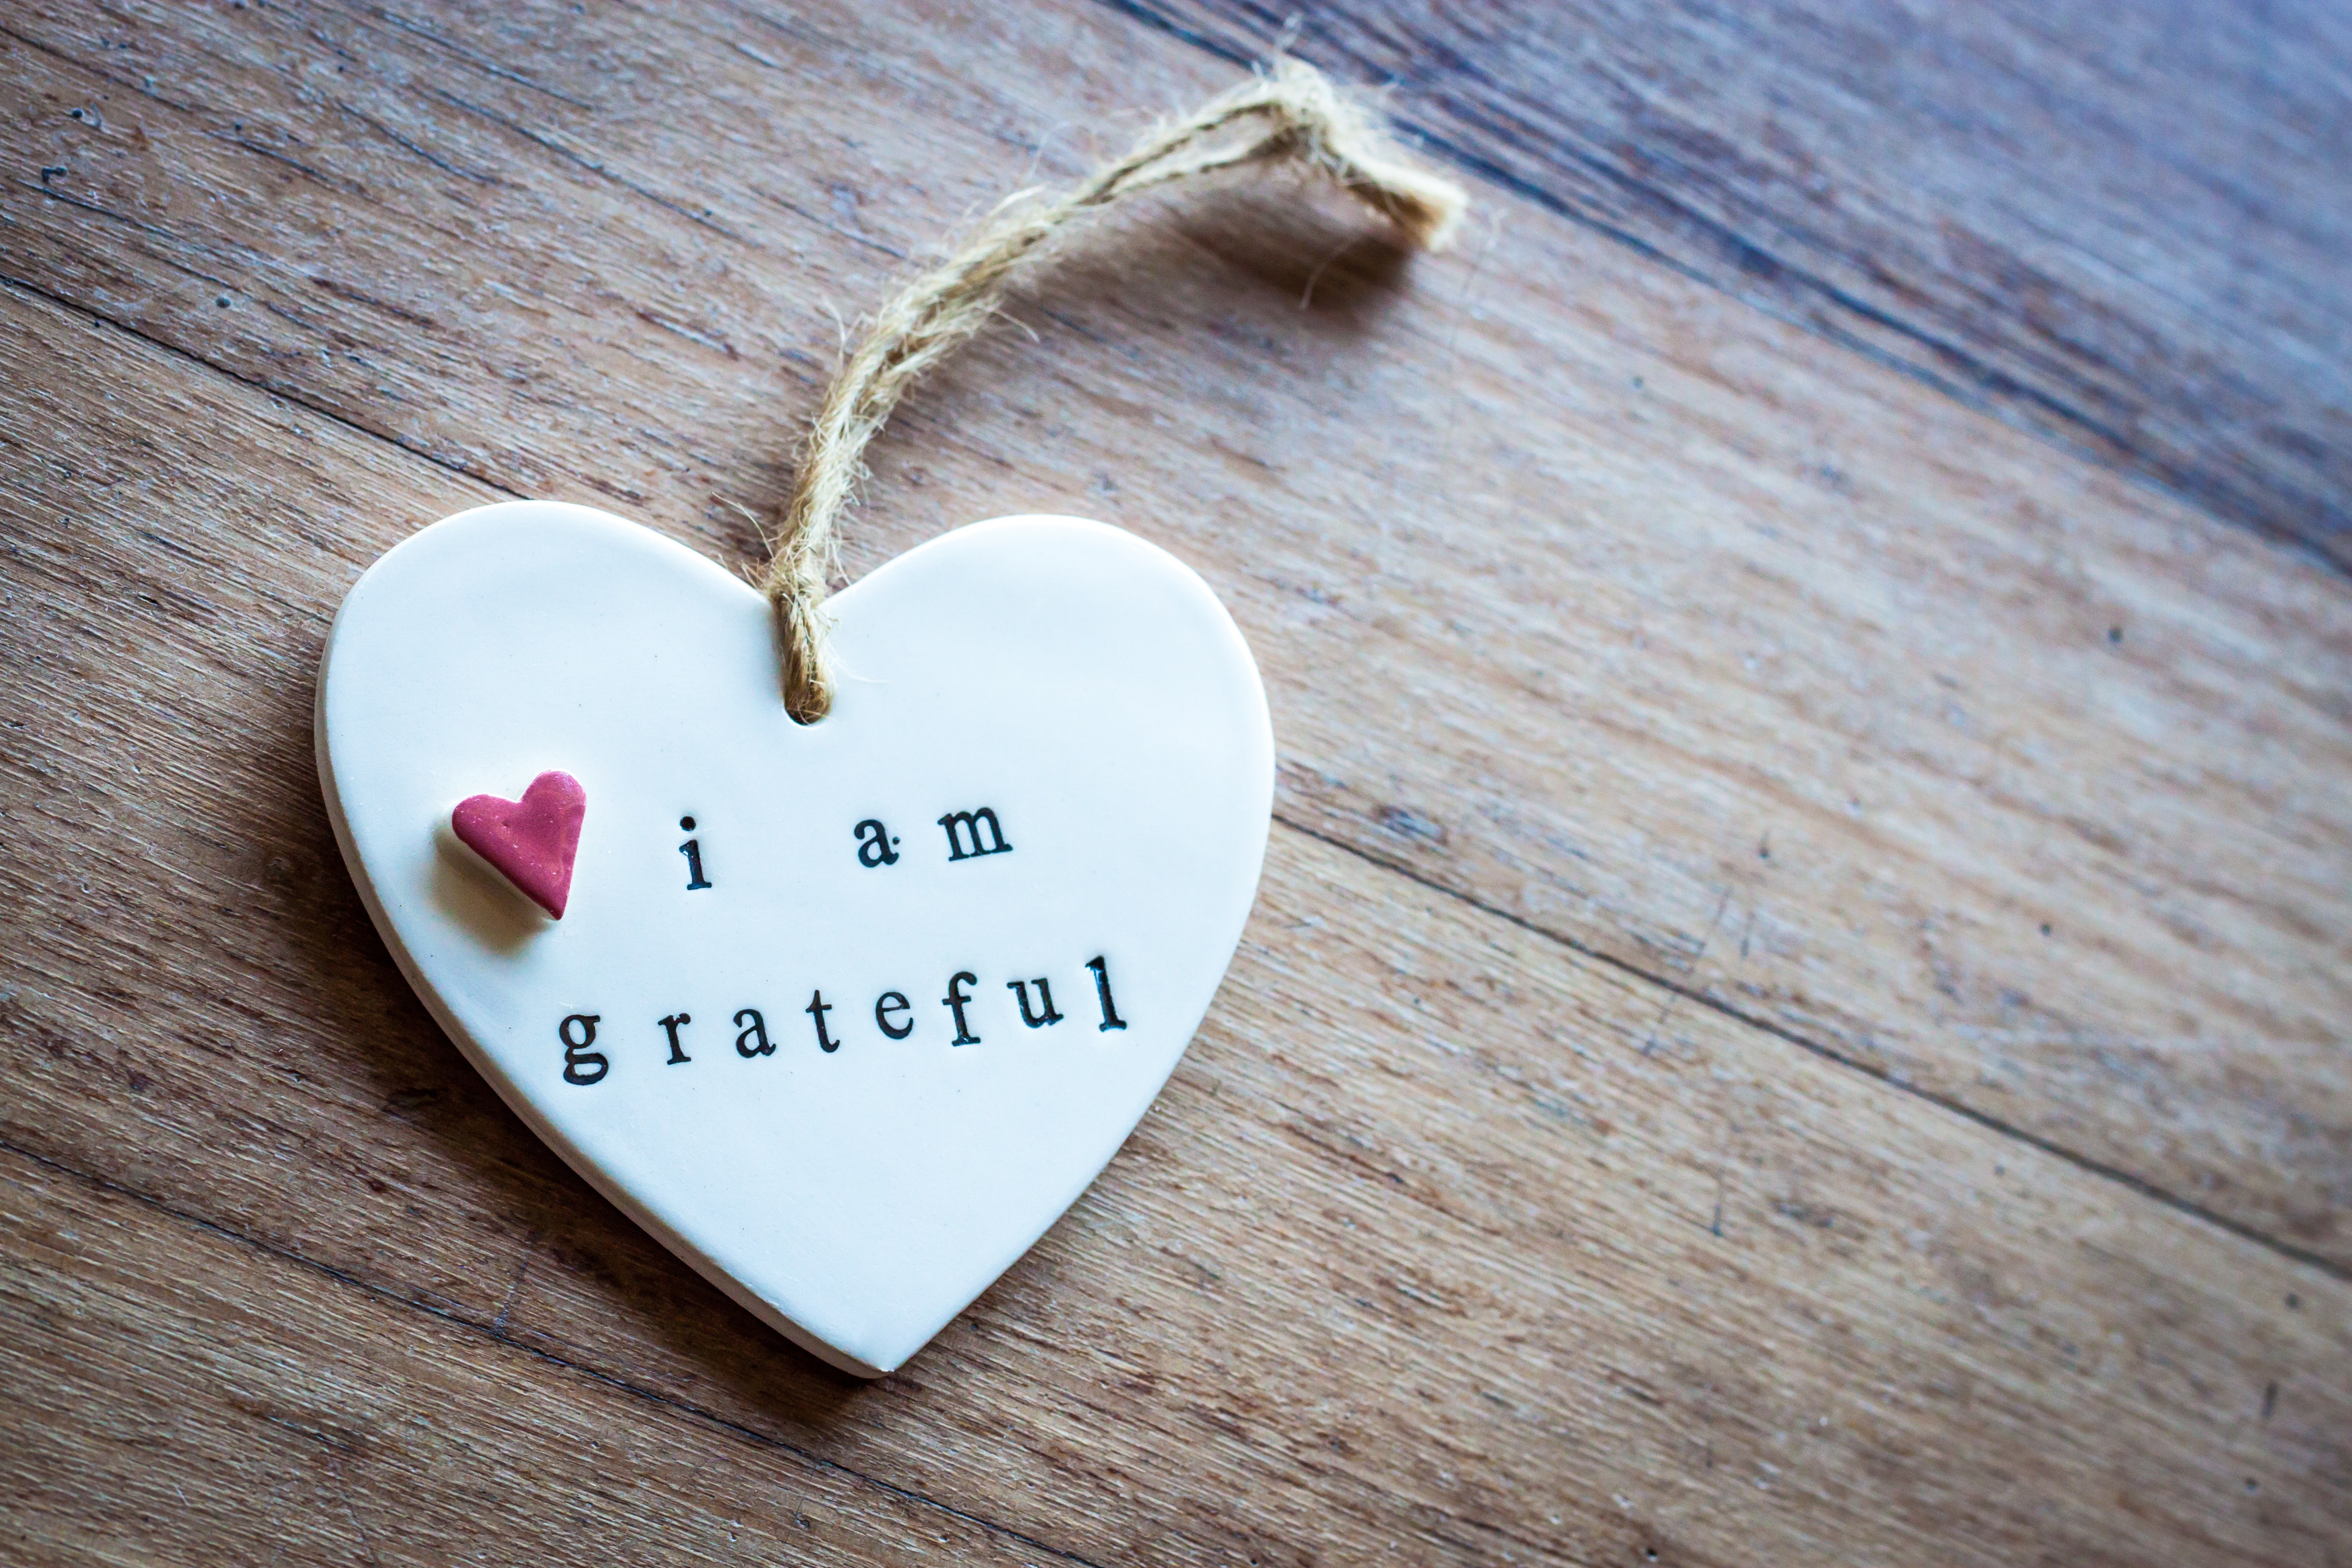 November Thankfulness #12: The Act of Gratefulness